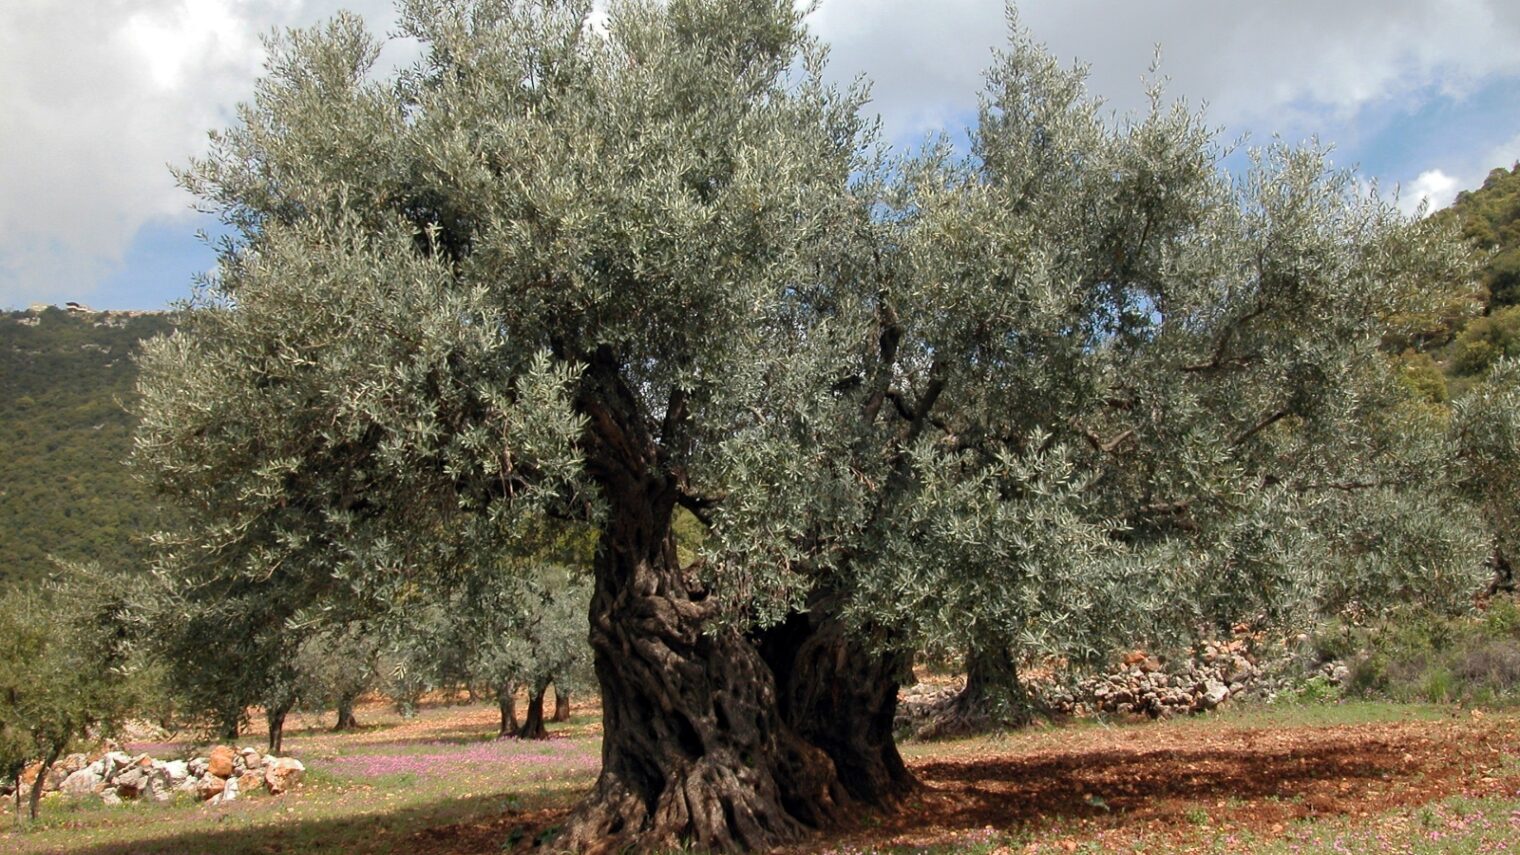 The ancient and still fertile olive tree at Ein al-Asad on Mount Meron. Photo by Yaacov Shkolnik